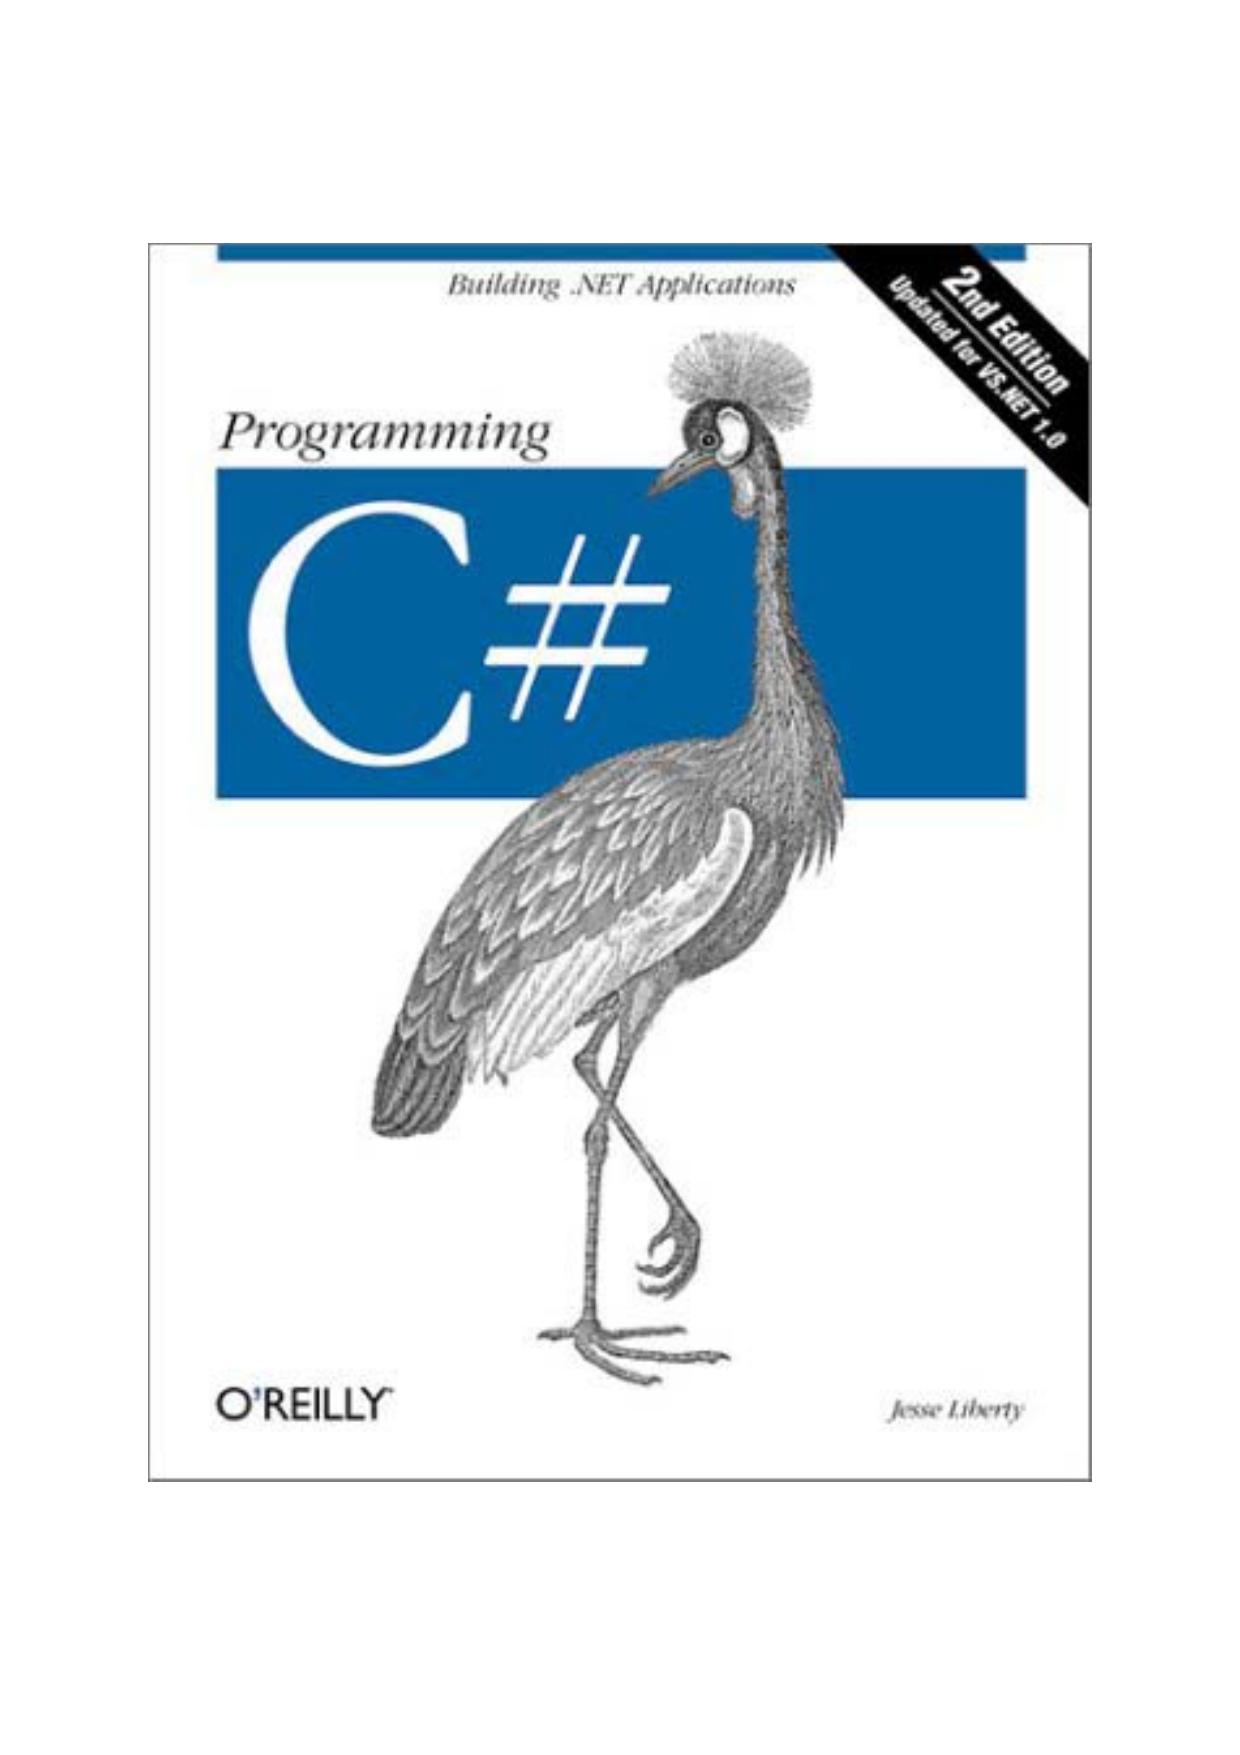 Programming C#, 2nd Edition